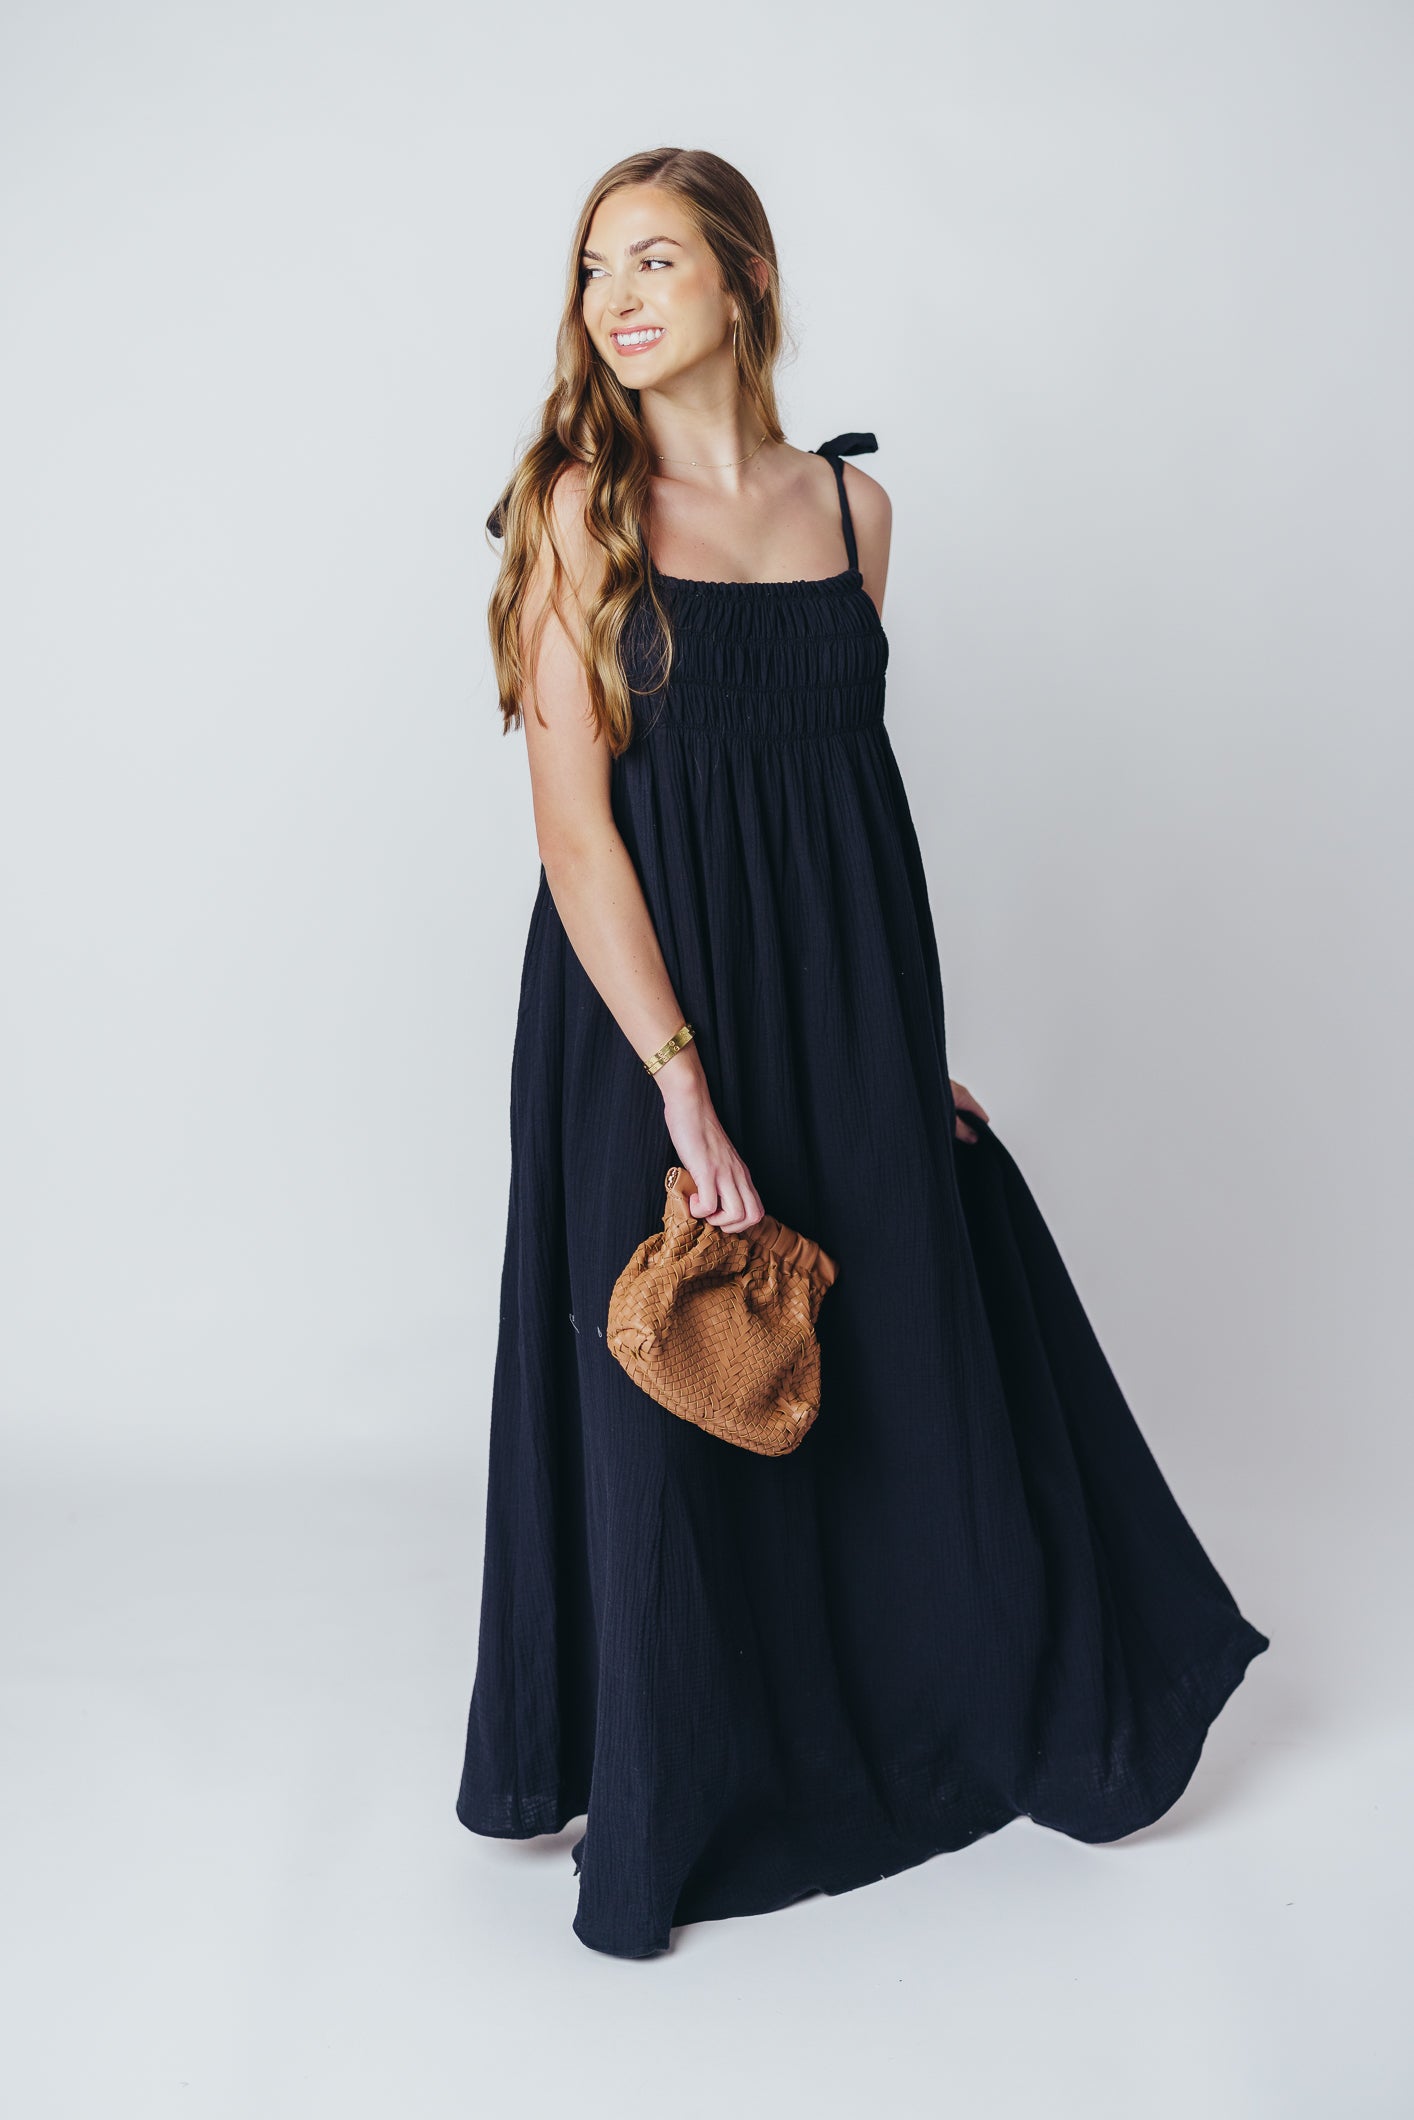 Almeria Smocked Maxi Dress with Self-Tie Straps in Black - Bump Friendly